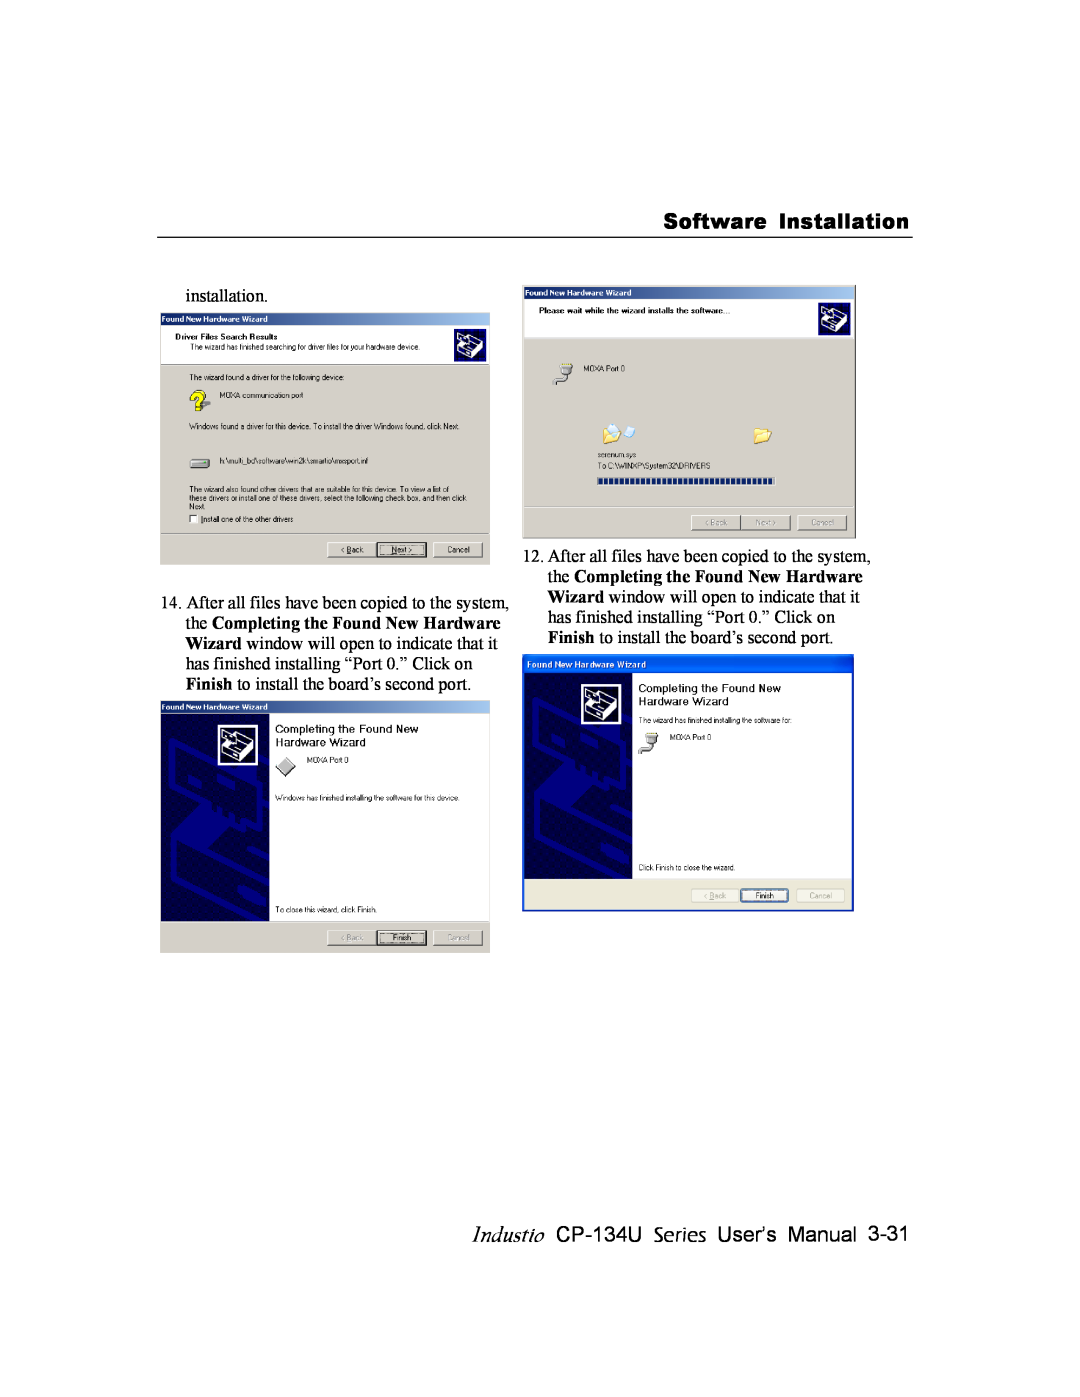 Moxa Technologies user manual Software Installation, Industio CP-134U Series User’s Manual, installation 